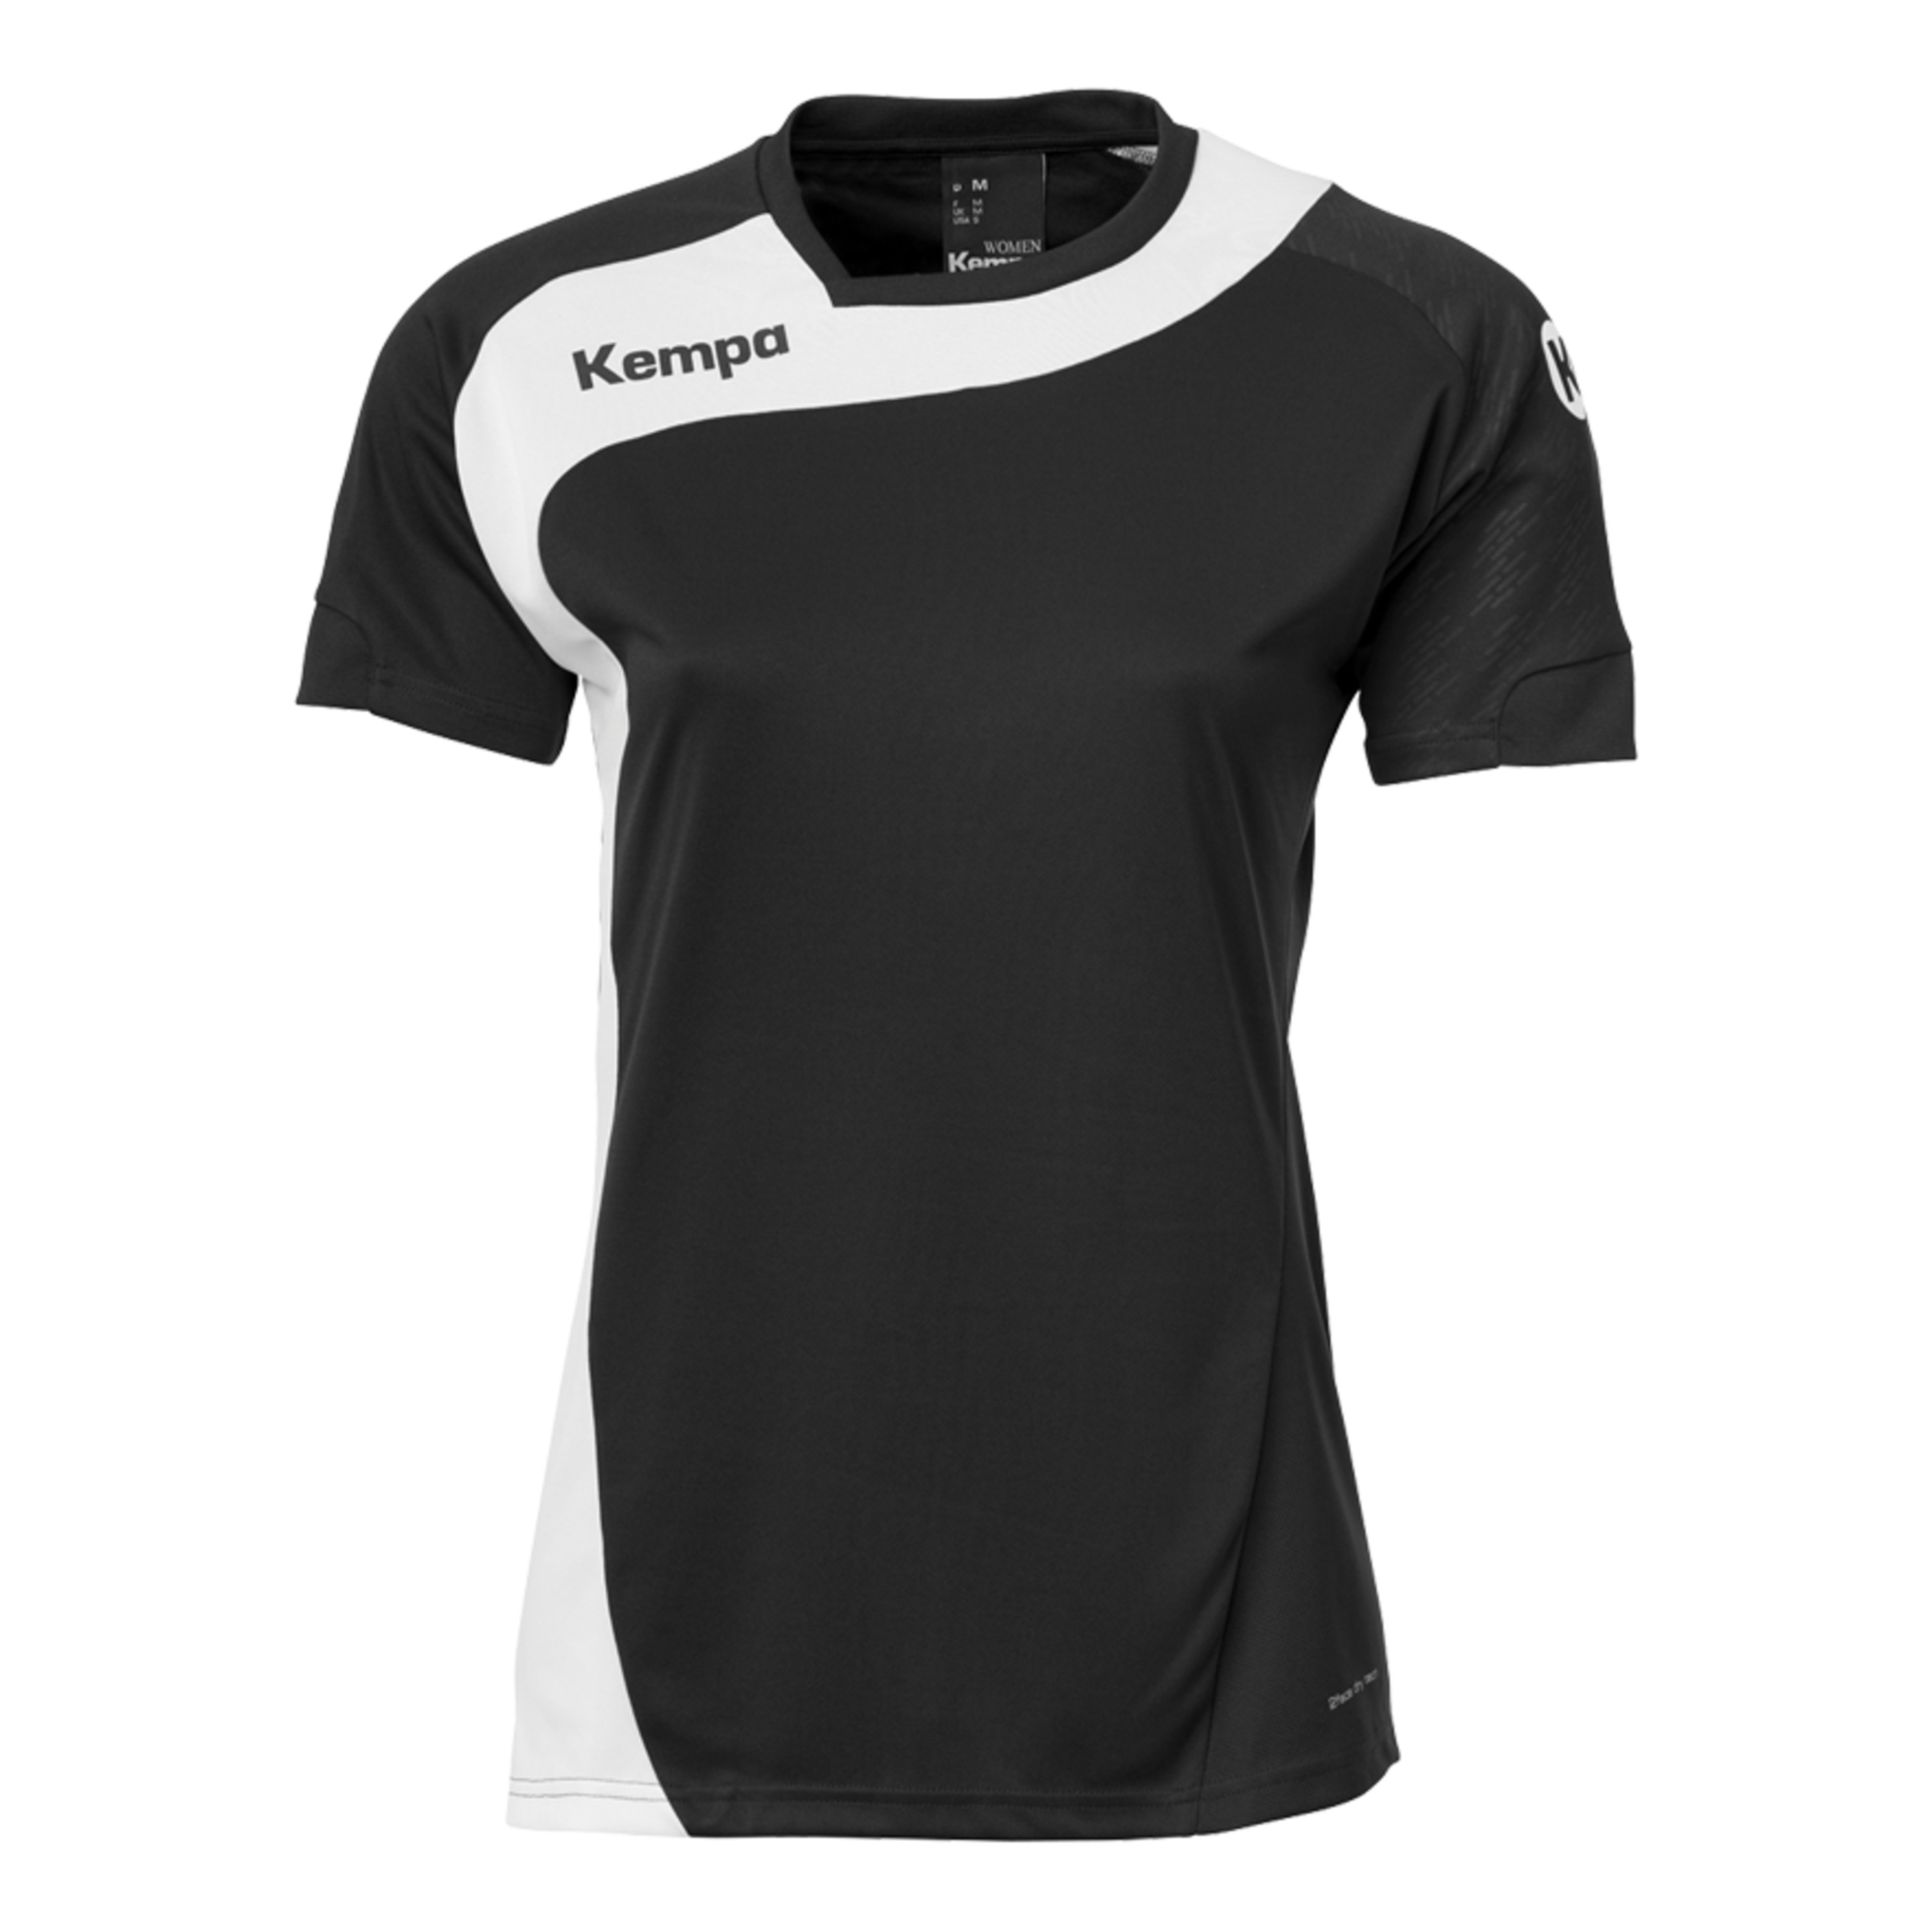 Peak Camiseta Kempa - negro-blanco - 